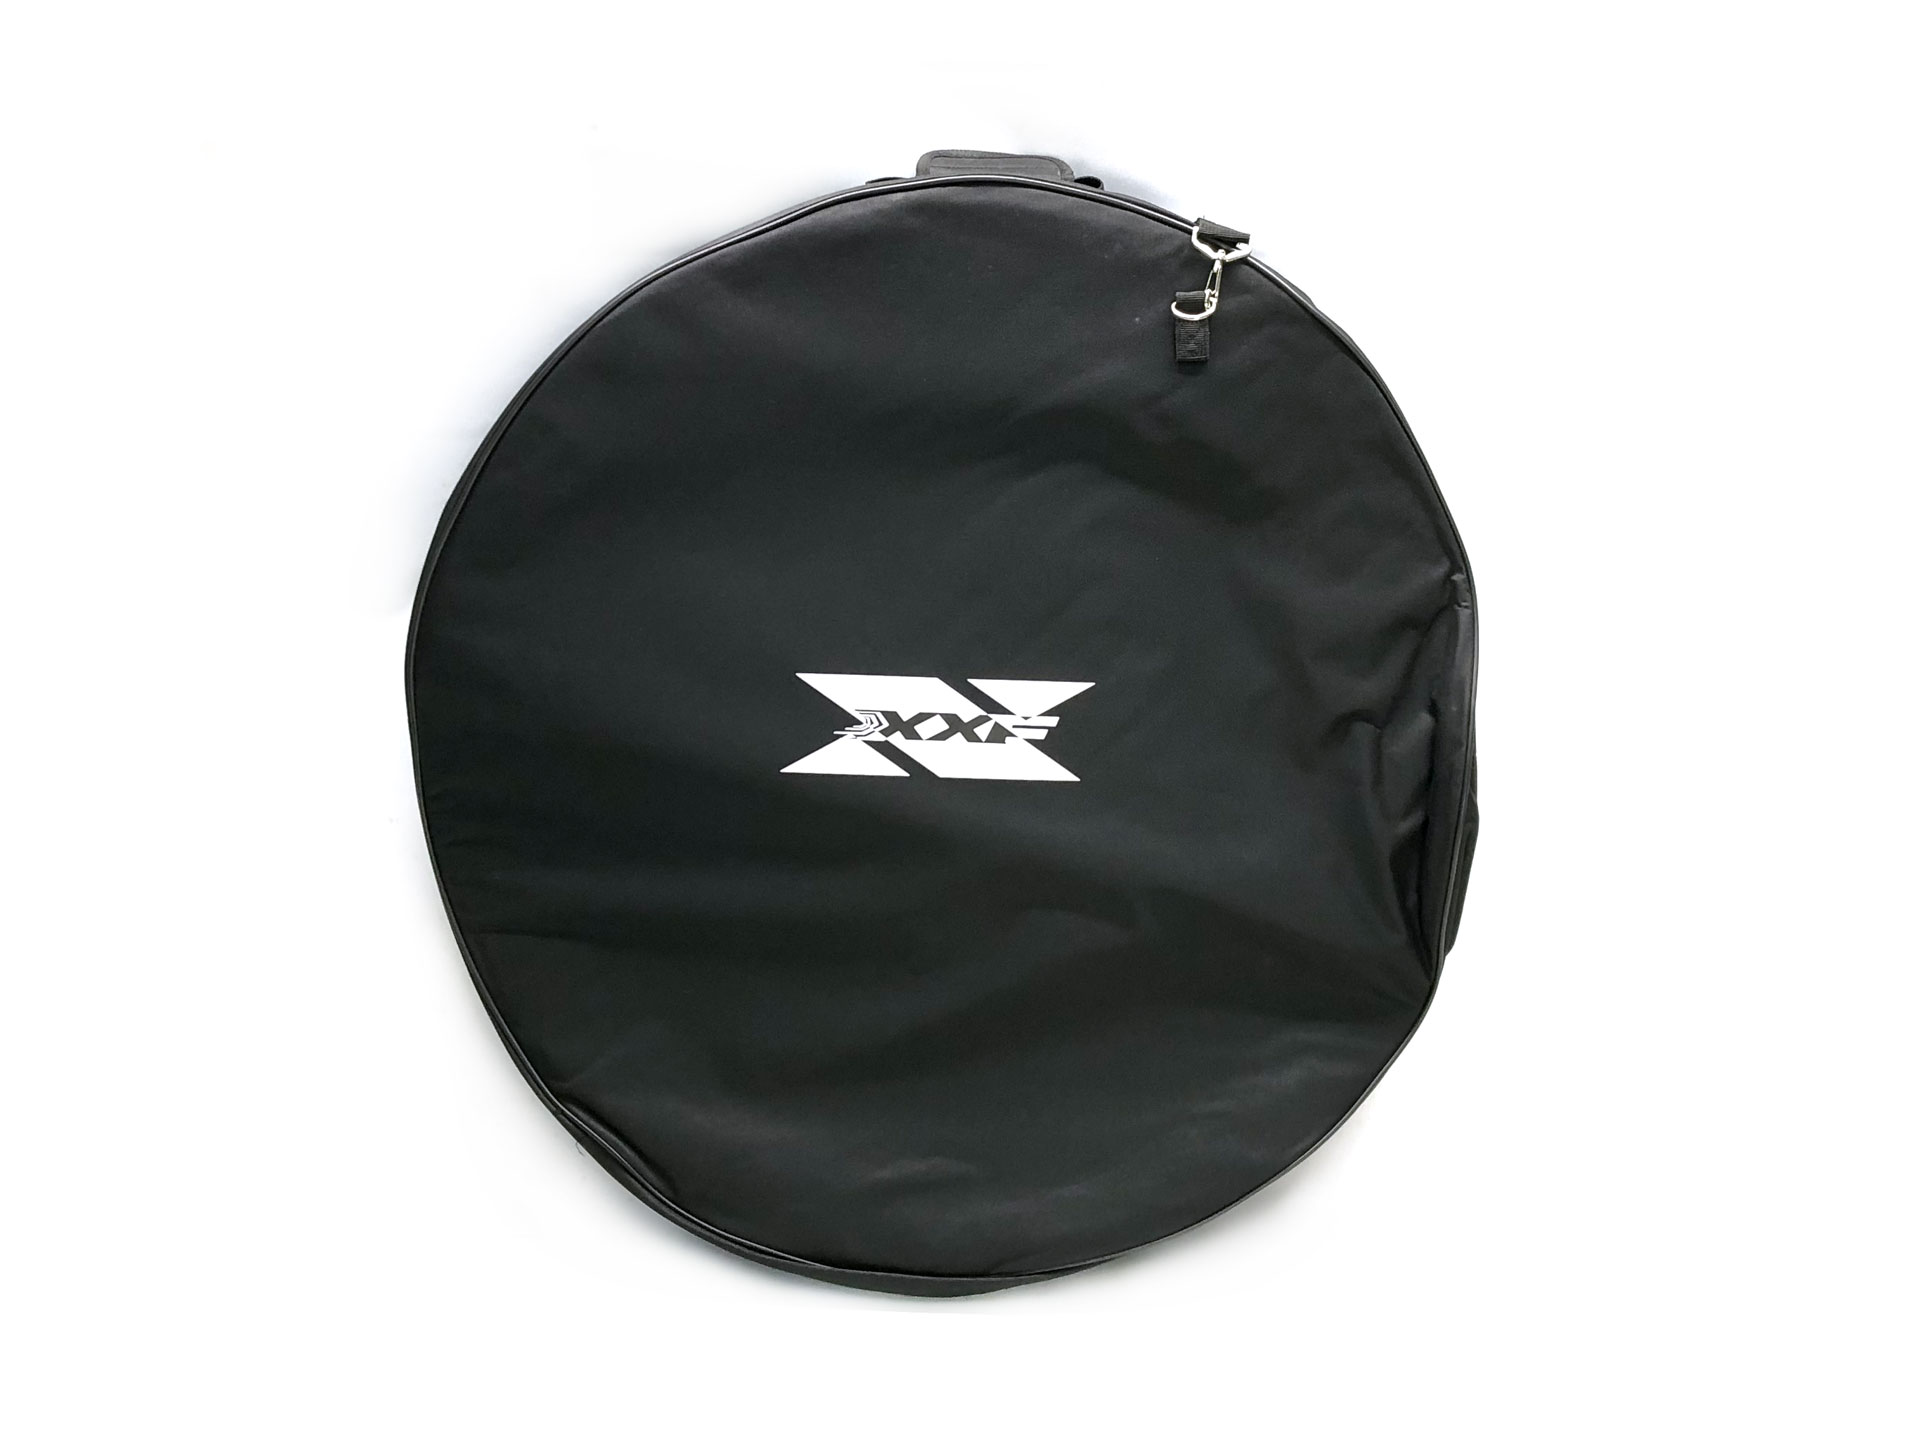 XXF 輪組保護袋